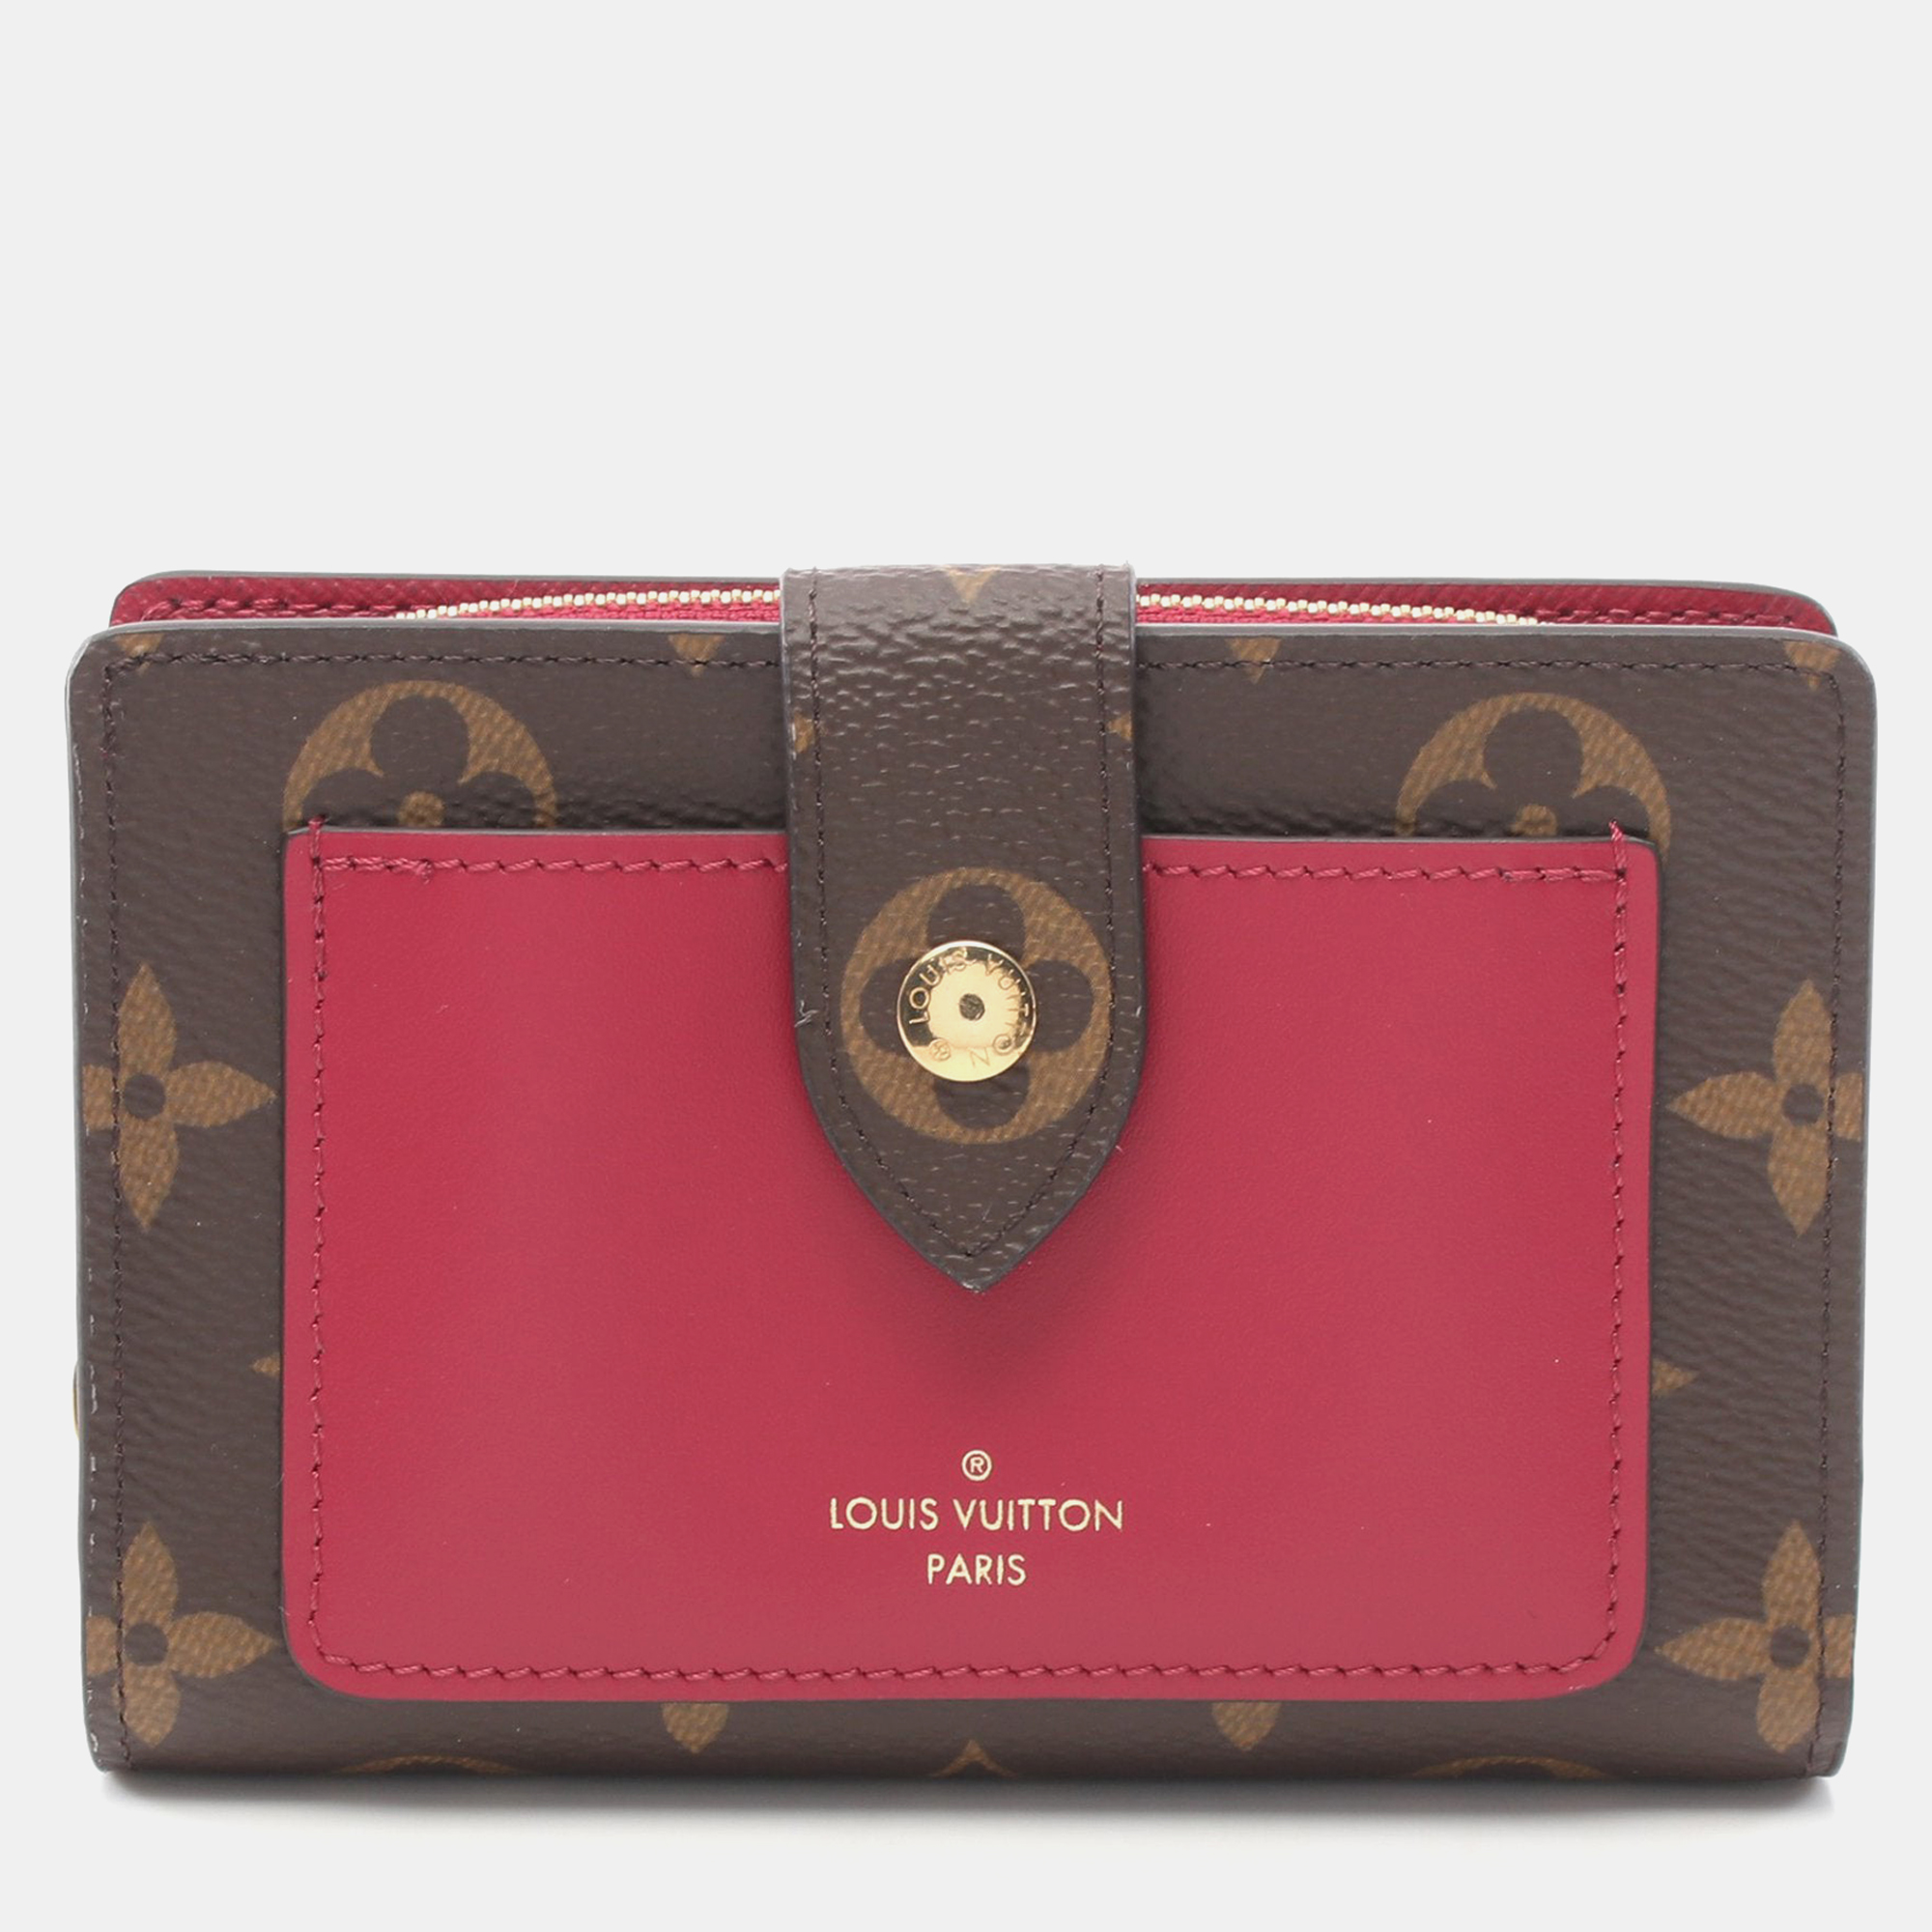 

Louis Vuitton Portefeuil Juliet Monogram Fuchsia Bi-fold wallet PVC Leather Brown Pink purple